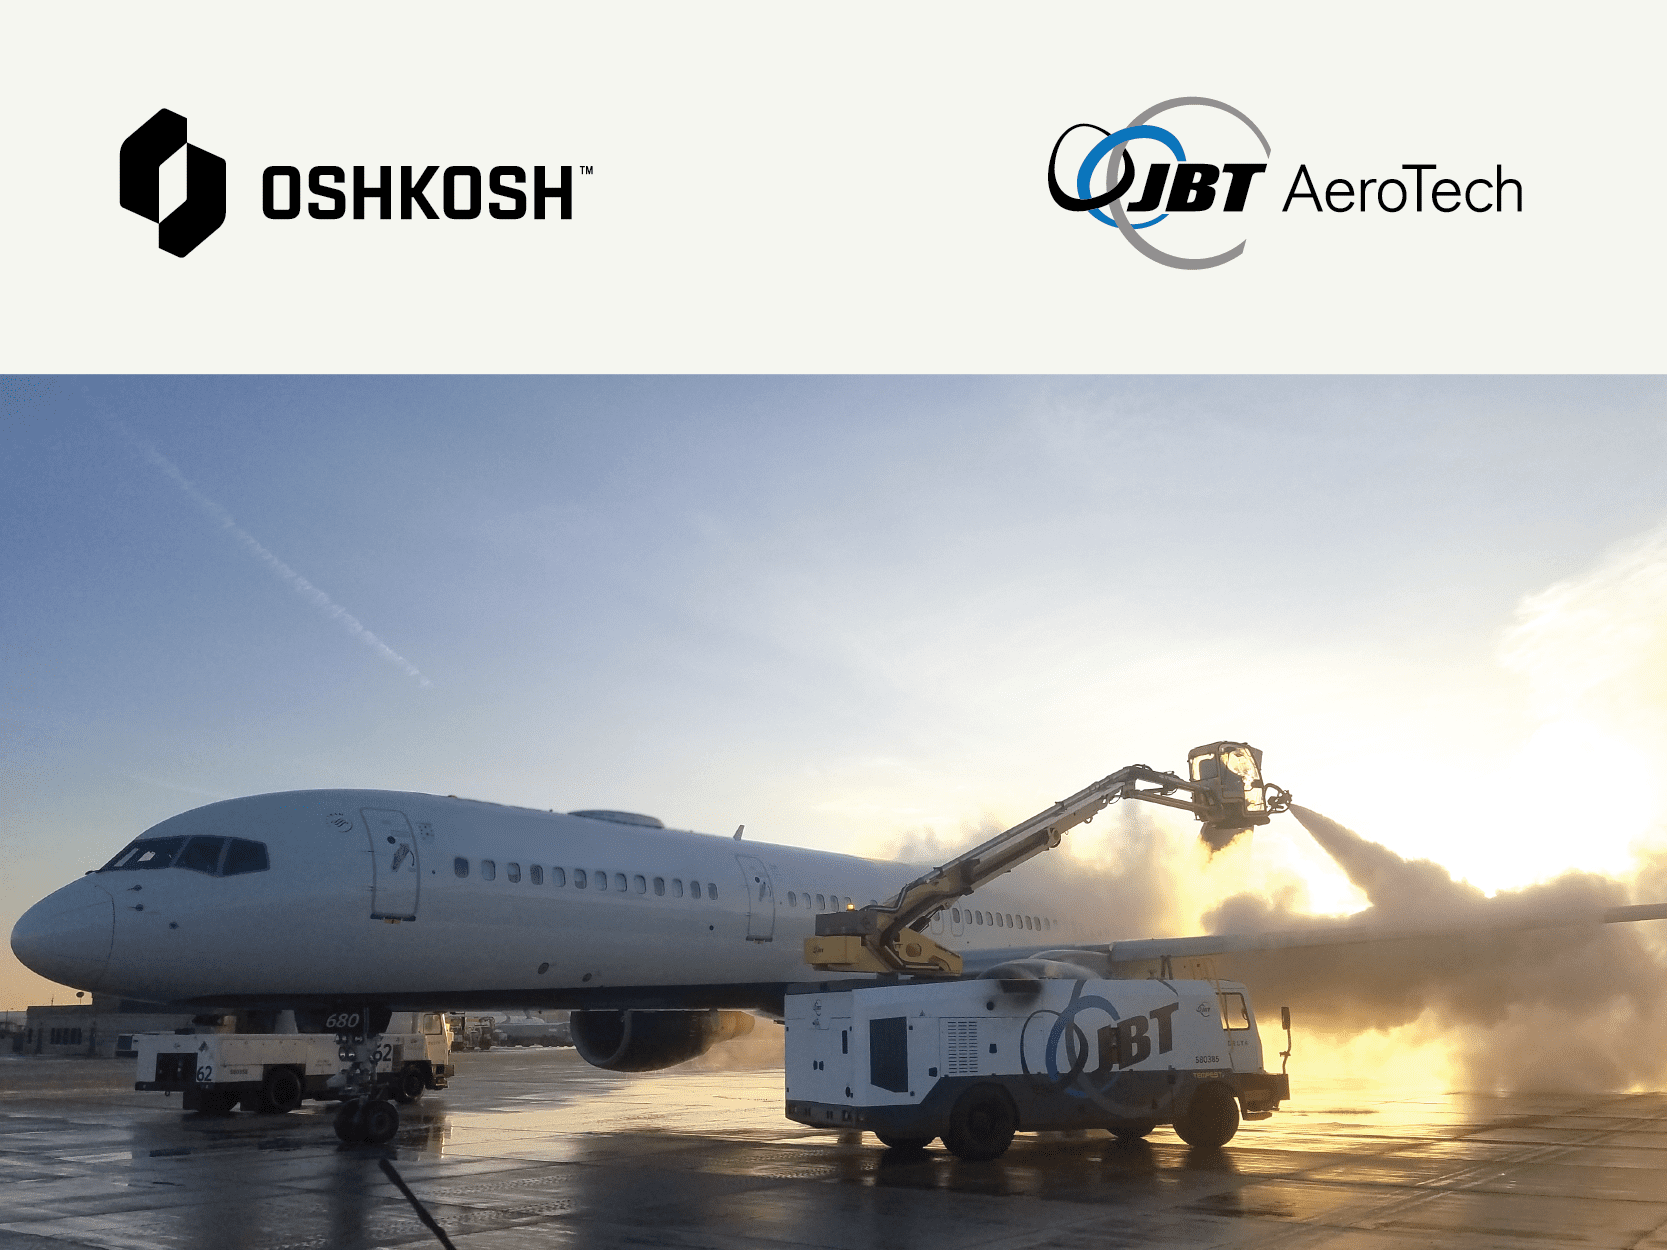 Image of airplane and ground support vehicle with Oshkosh logo and JBT AeroTech logo